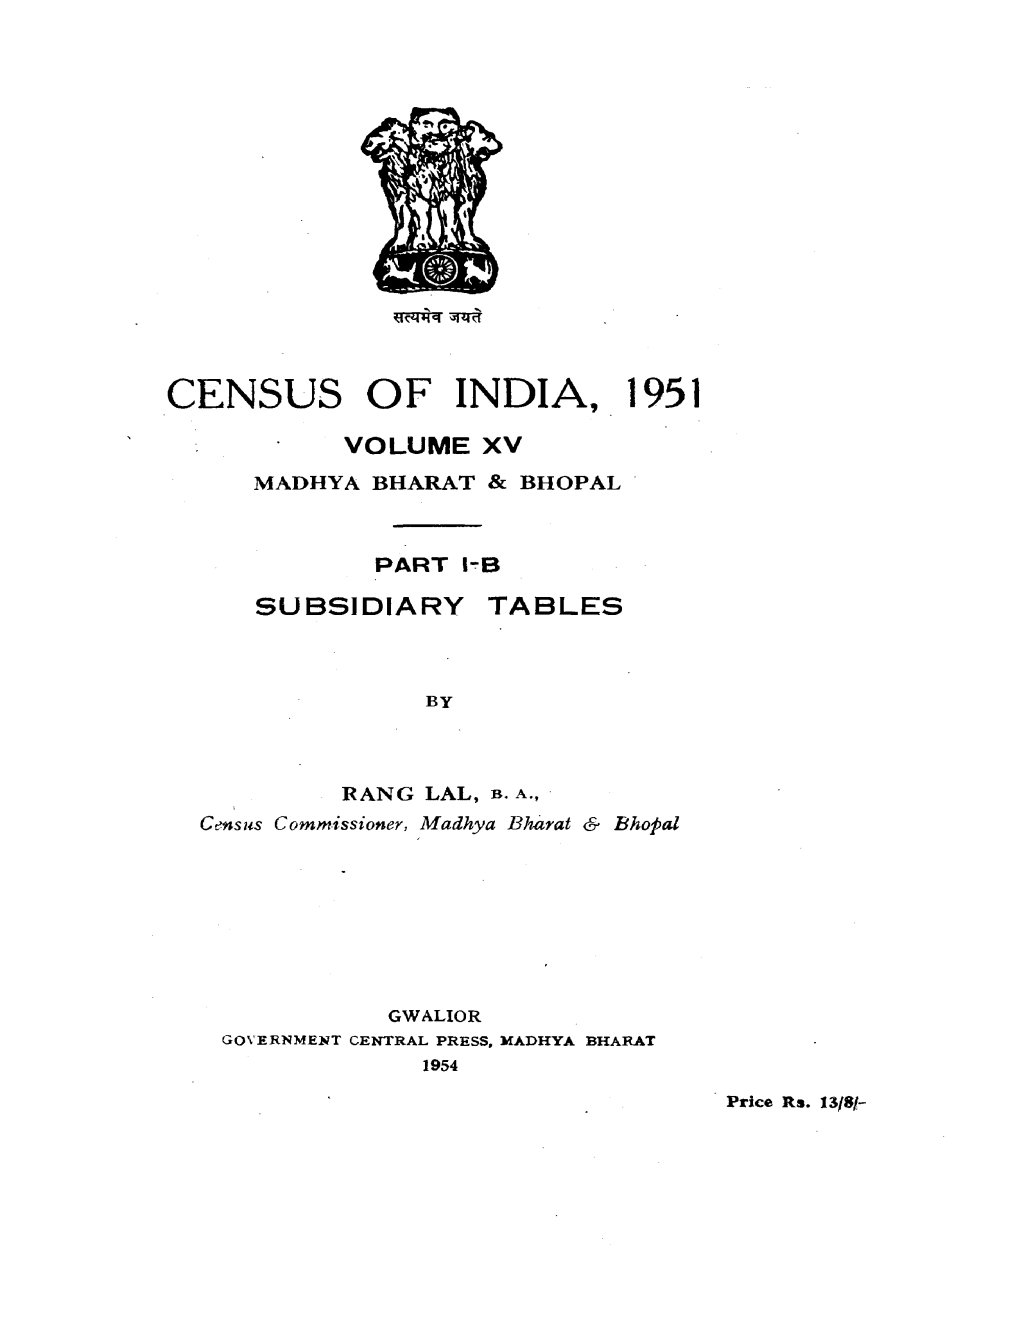 Subsidiary Tables, Part I-B, Vol-XV, Madhya Bharat & Bhopal